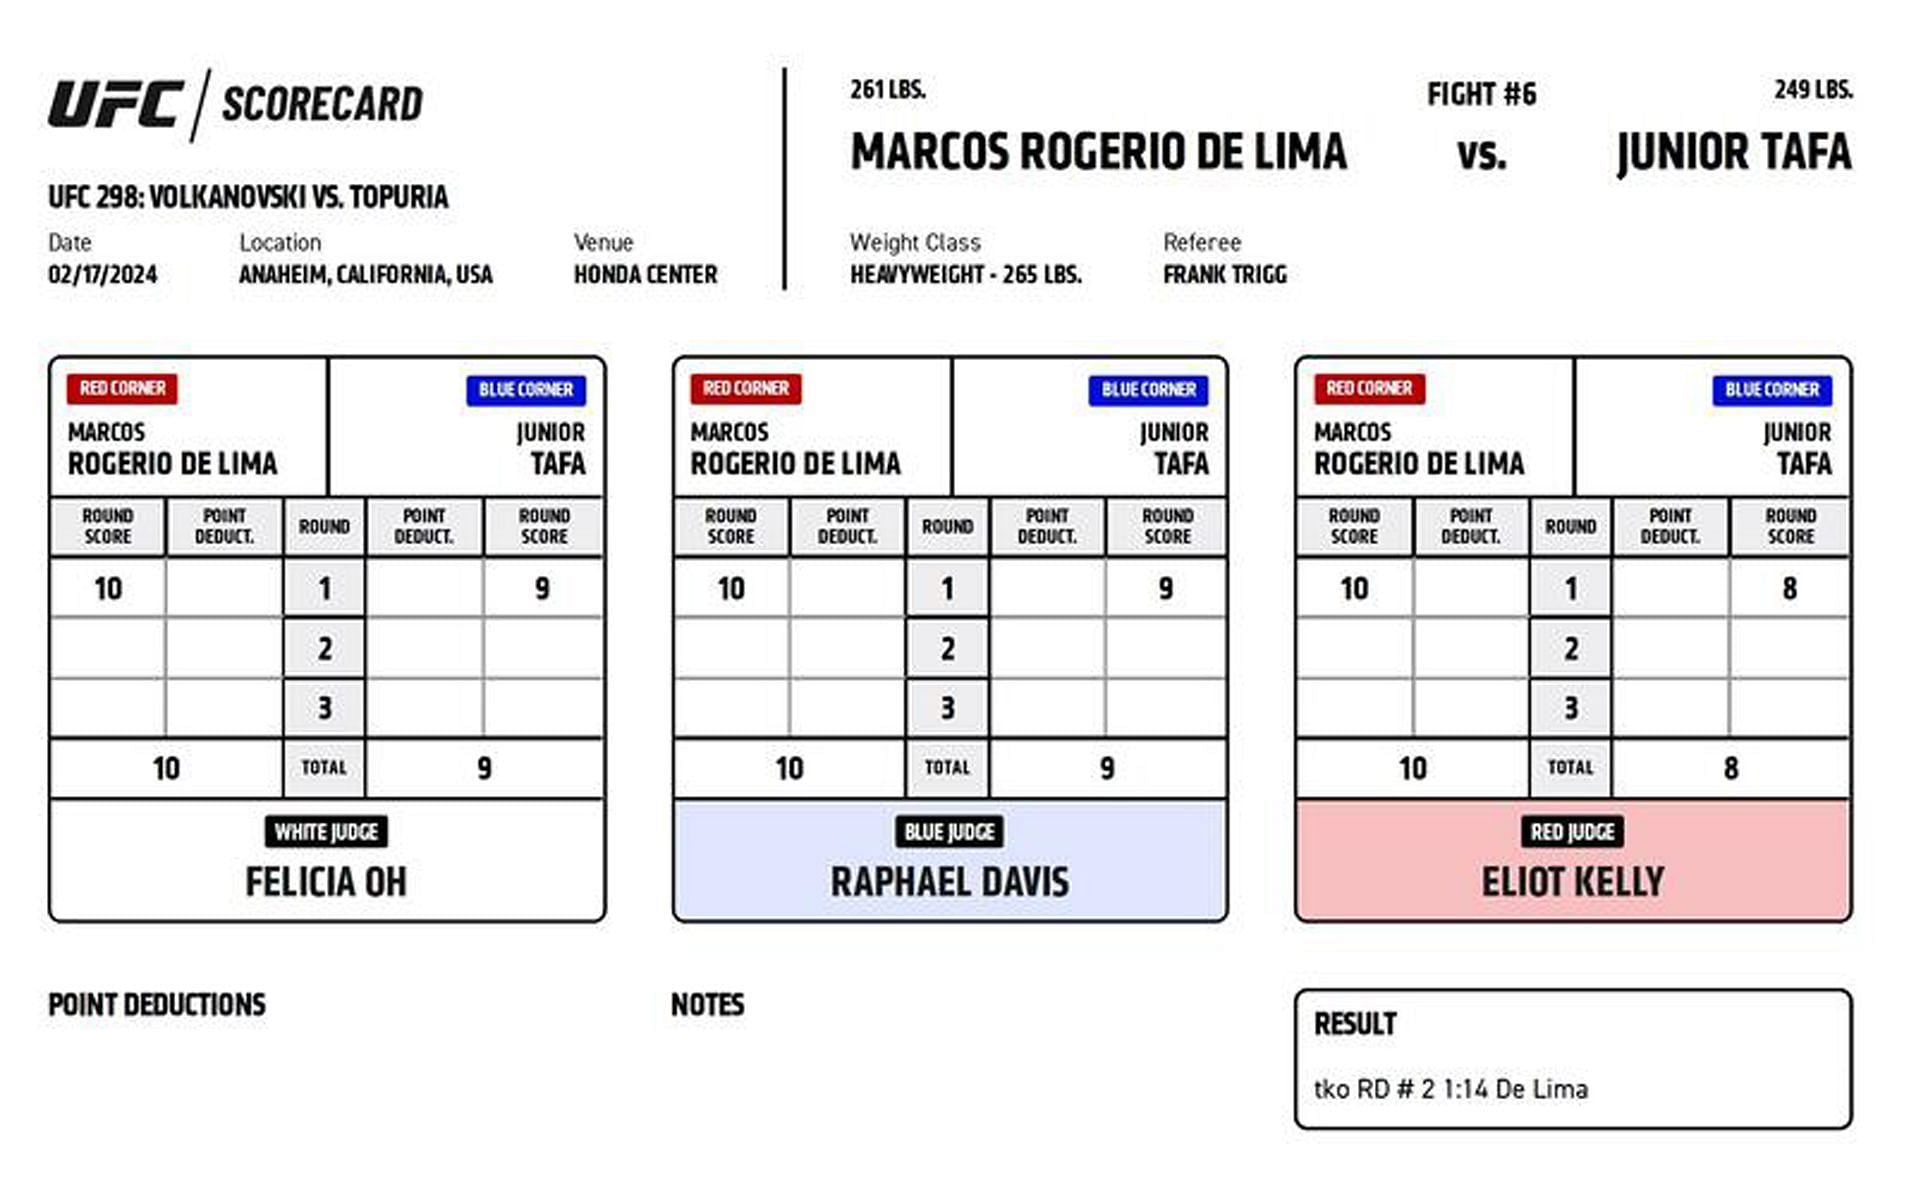 Marcos Rogerio De Lima def. Junior Tafa via TKO due to leg kicks and punches (R2, 1:14)